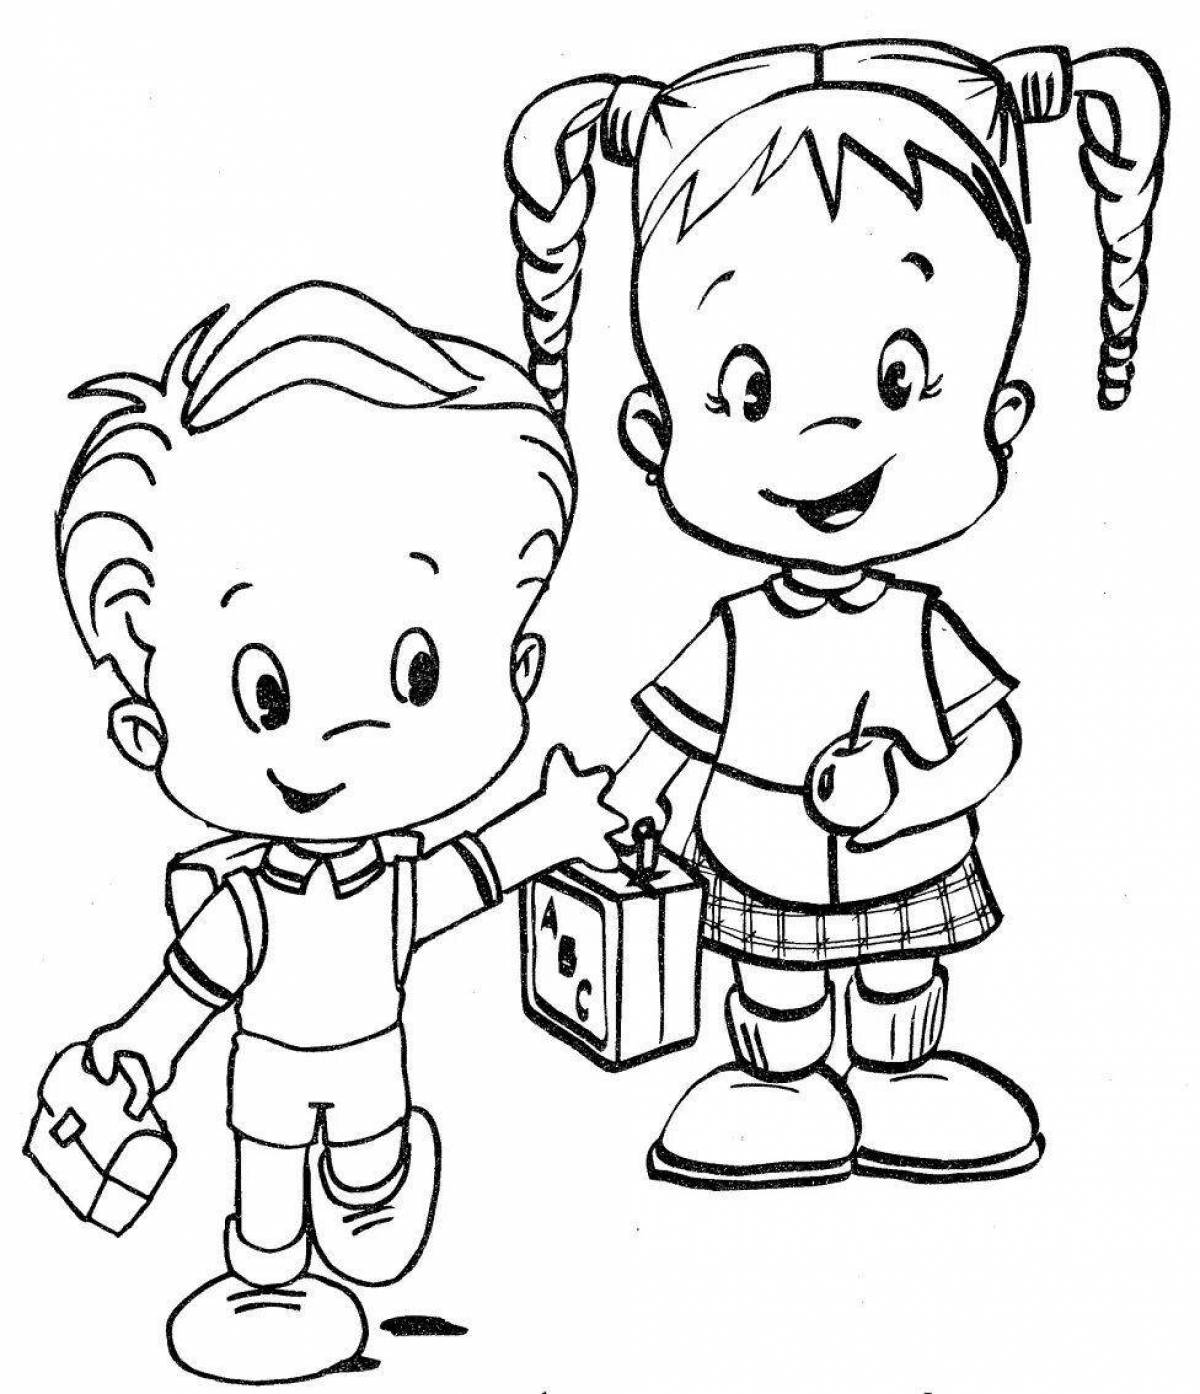 Fun coloring book friendship for preschoolers